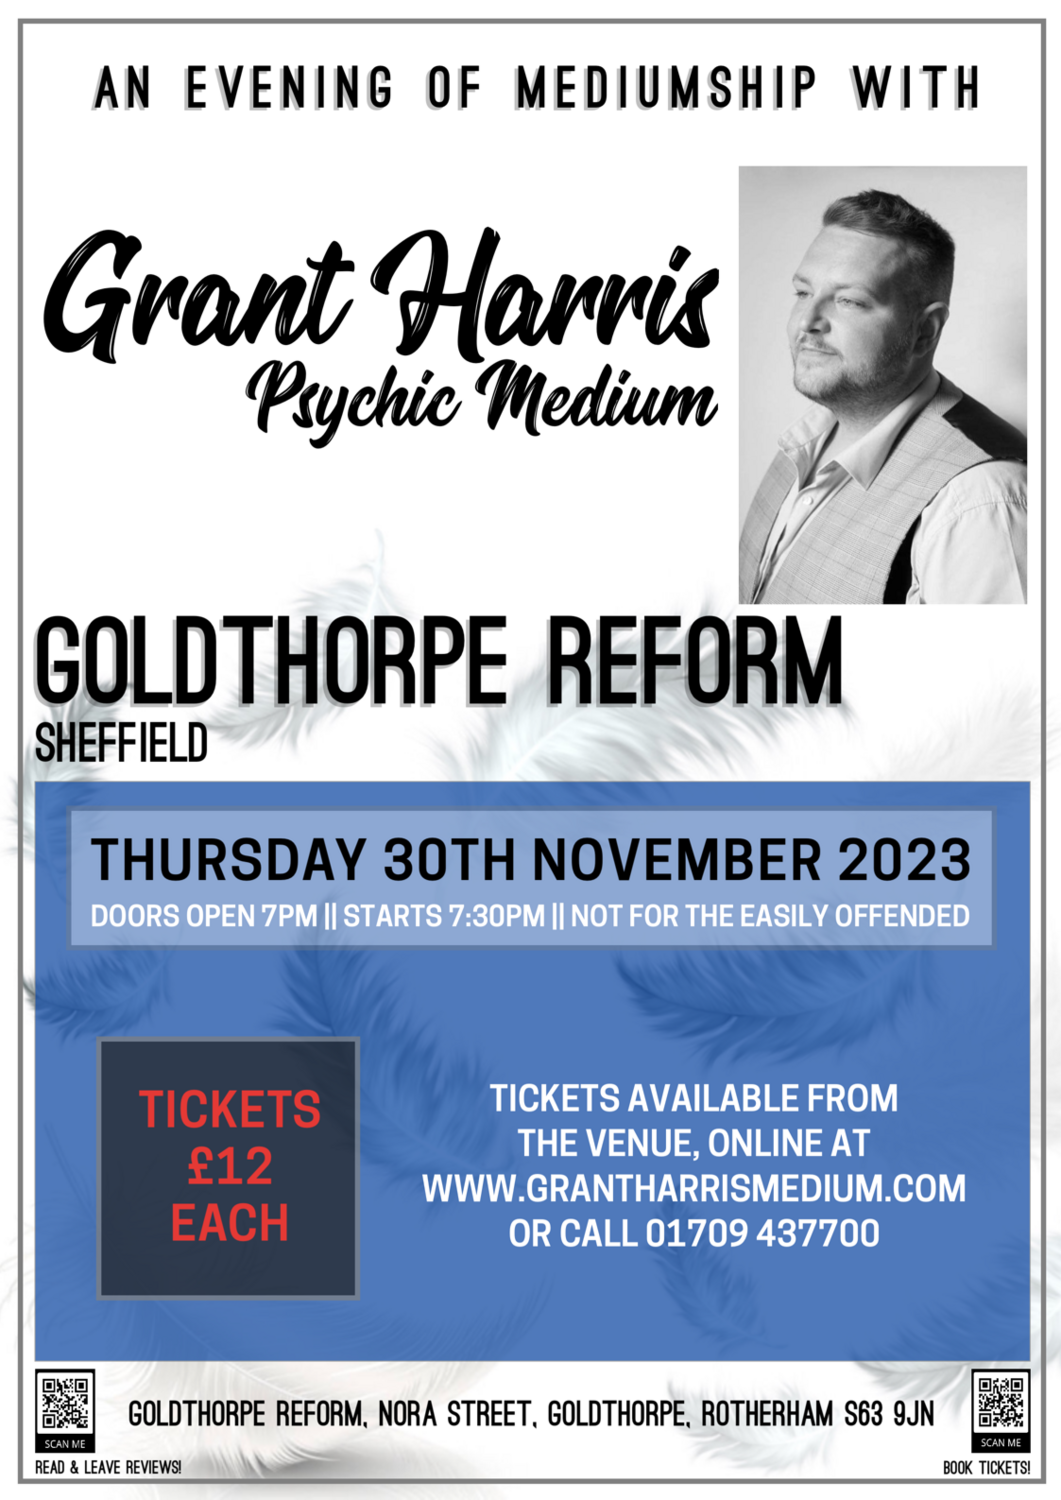 Goldthorpe Reform WMC, Rotherham, Thursday 30th November 2023